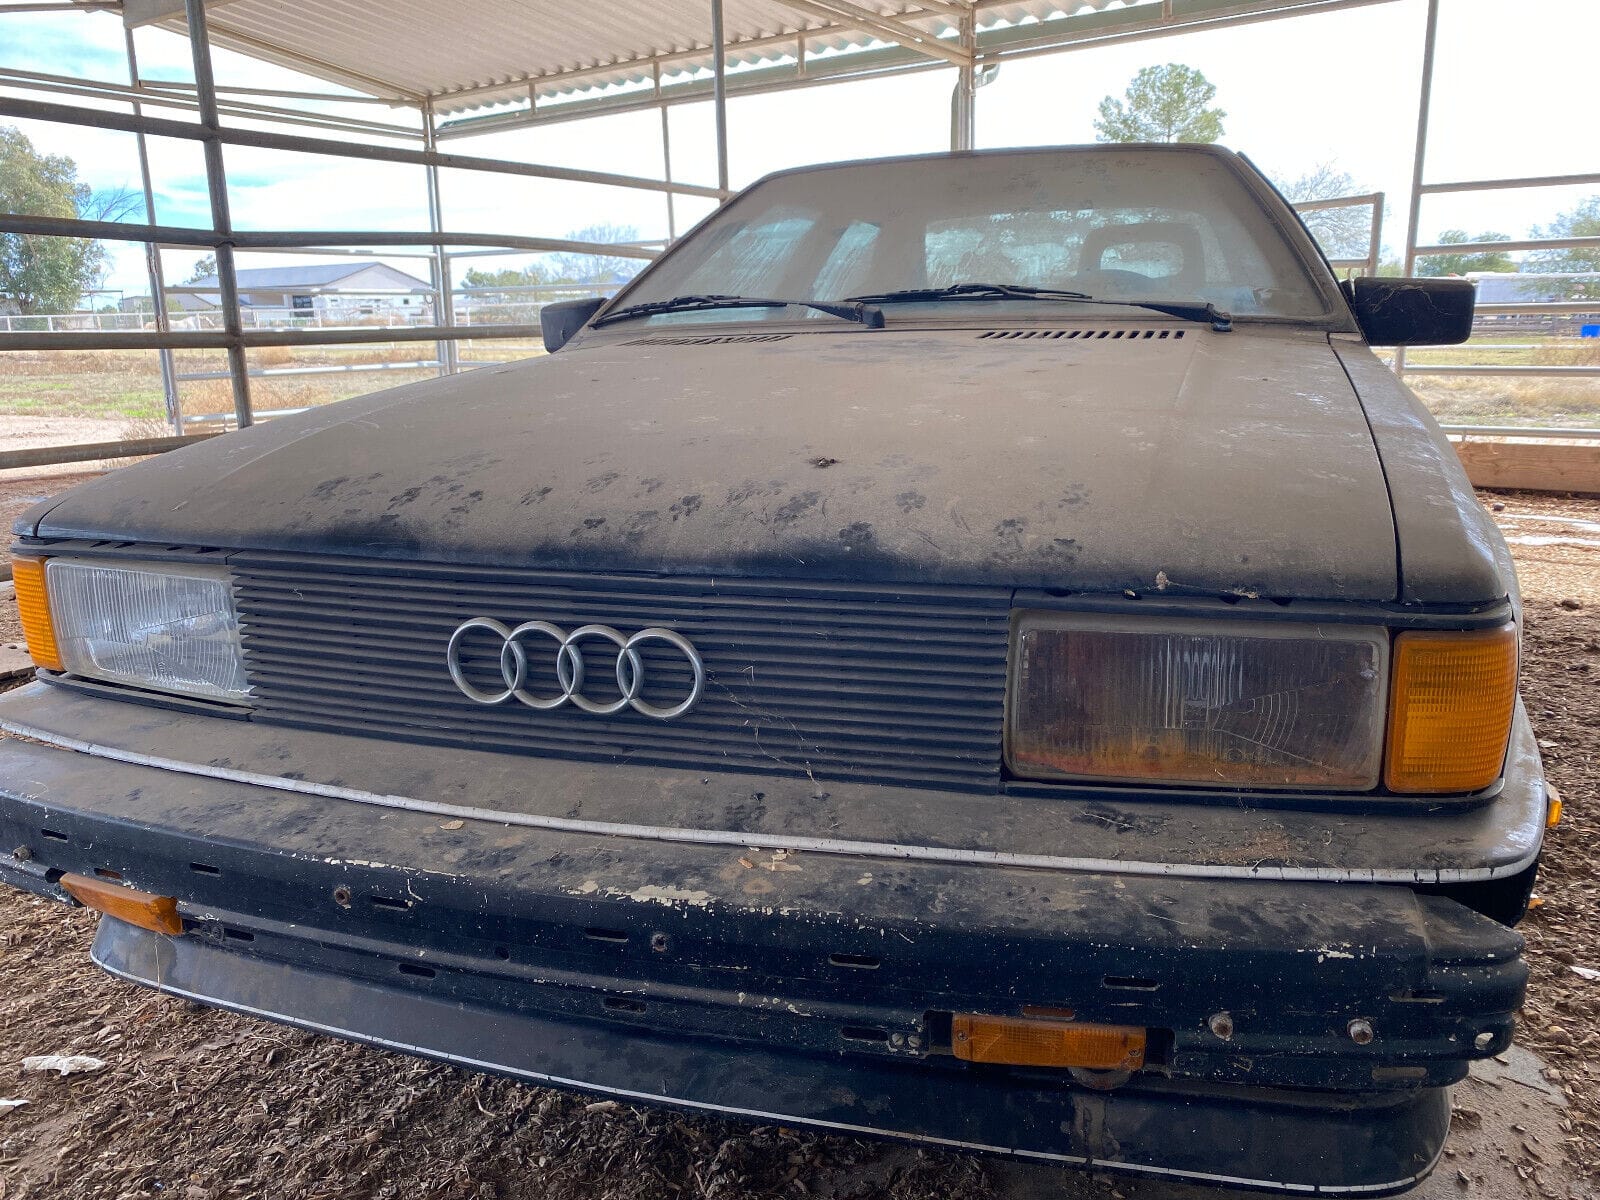 1983 Audi Quattro Unearthed In Arizona Barn